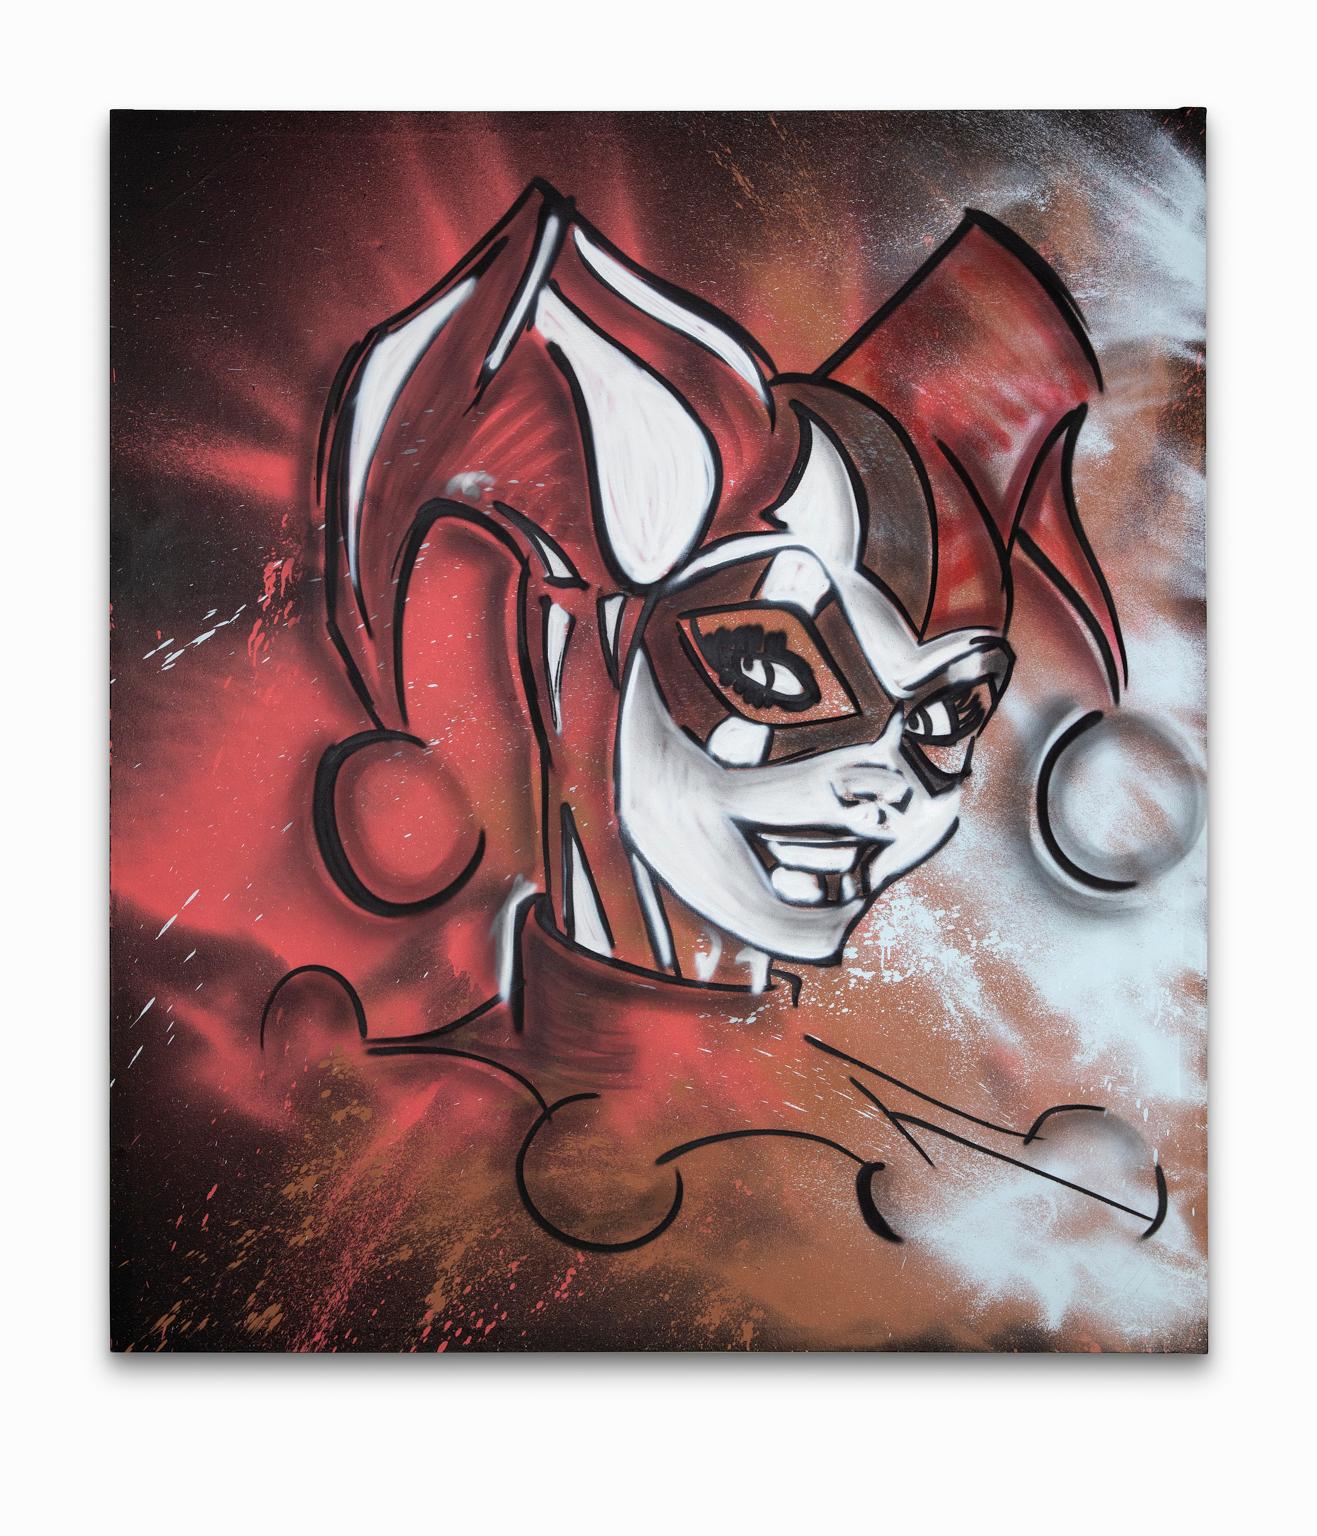 Antonio Shades Agee "Harley" Graffiti/Street Art Style Spray Paint